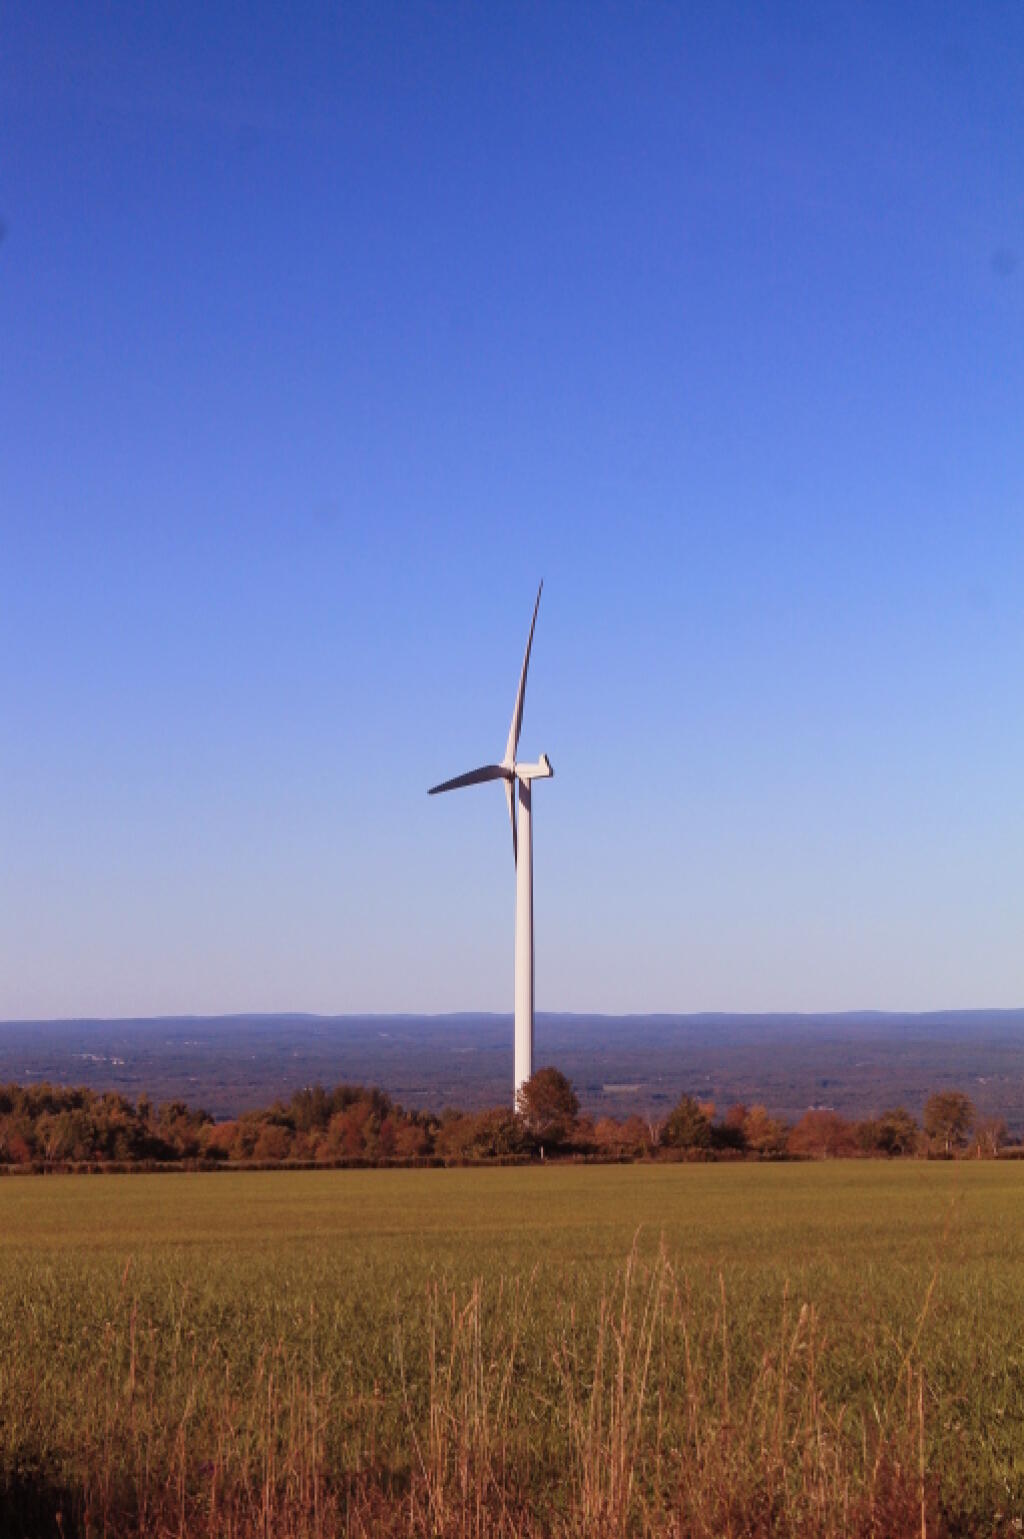  Wind Turbine Looking Towards The Adirondacks